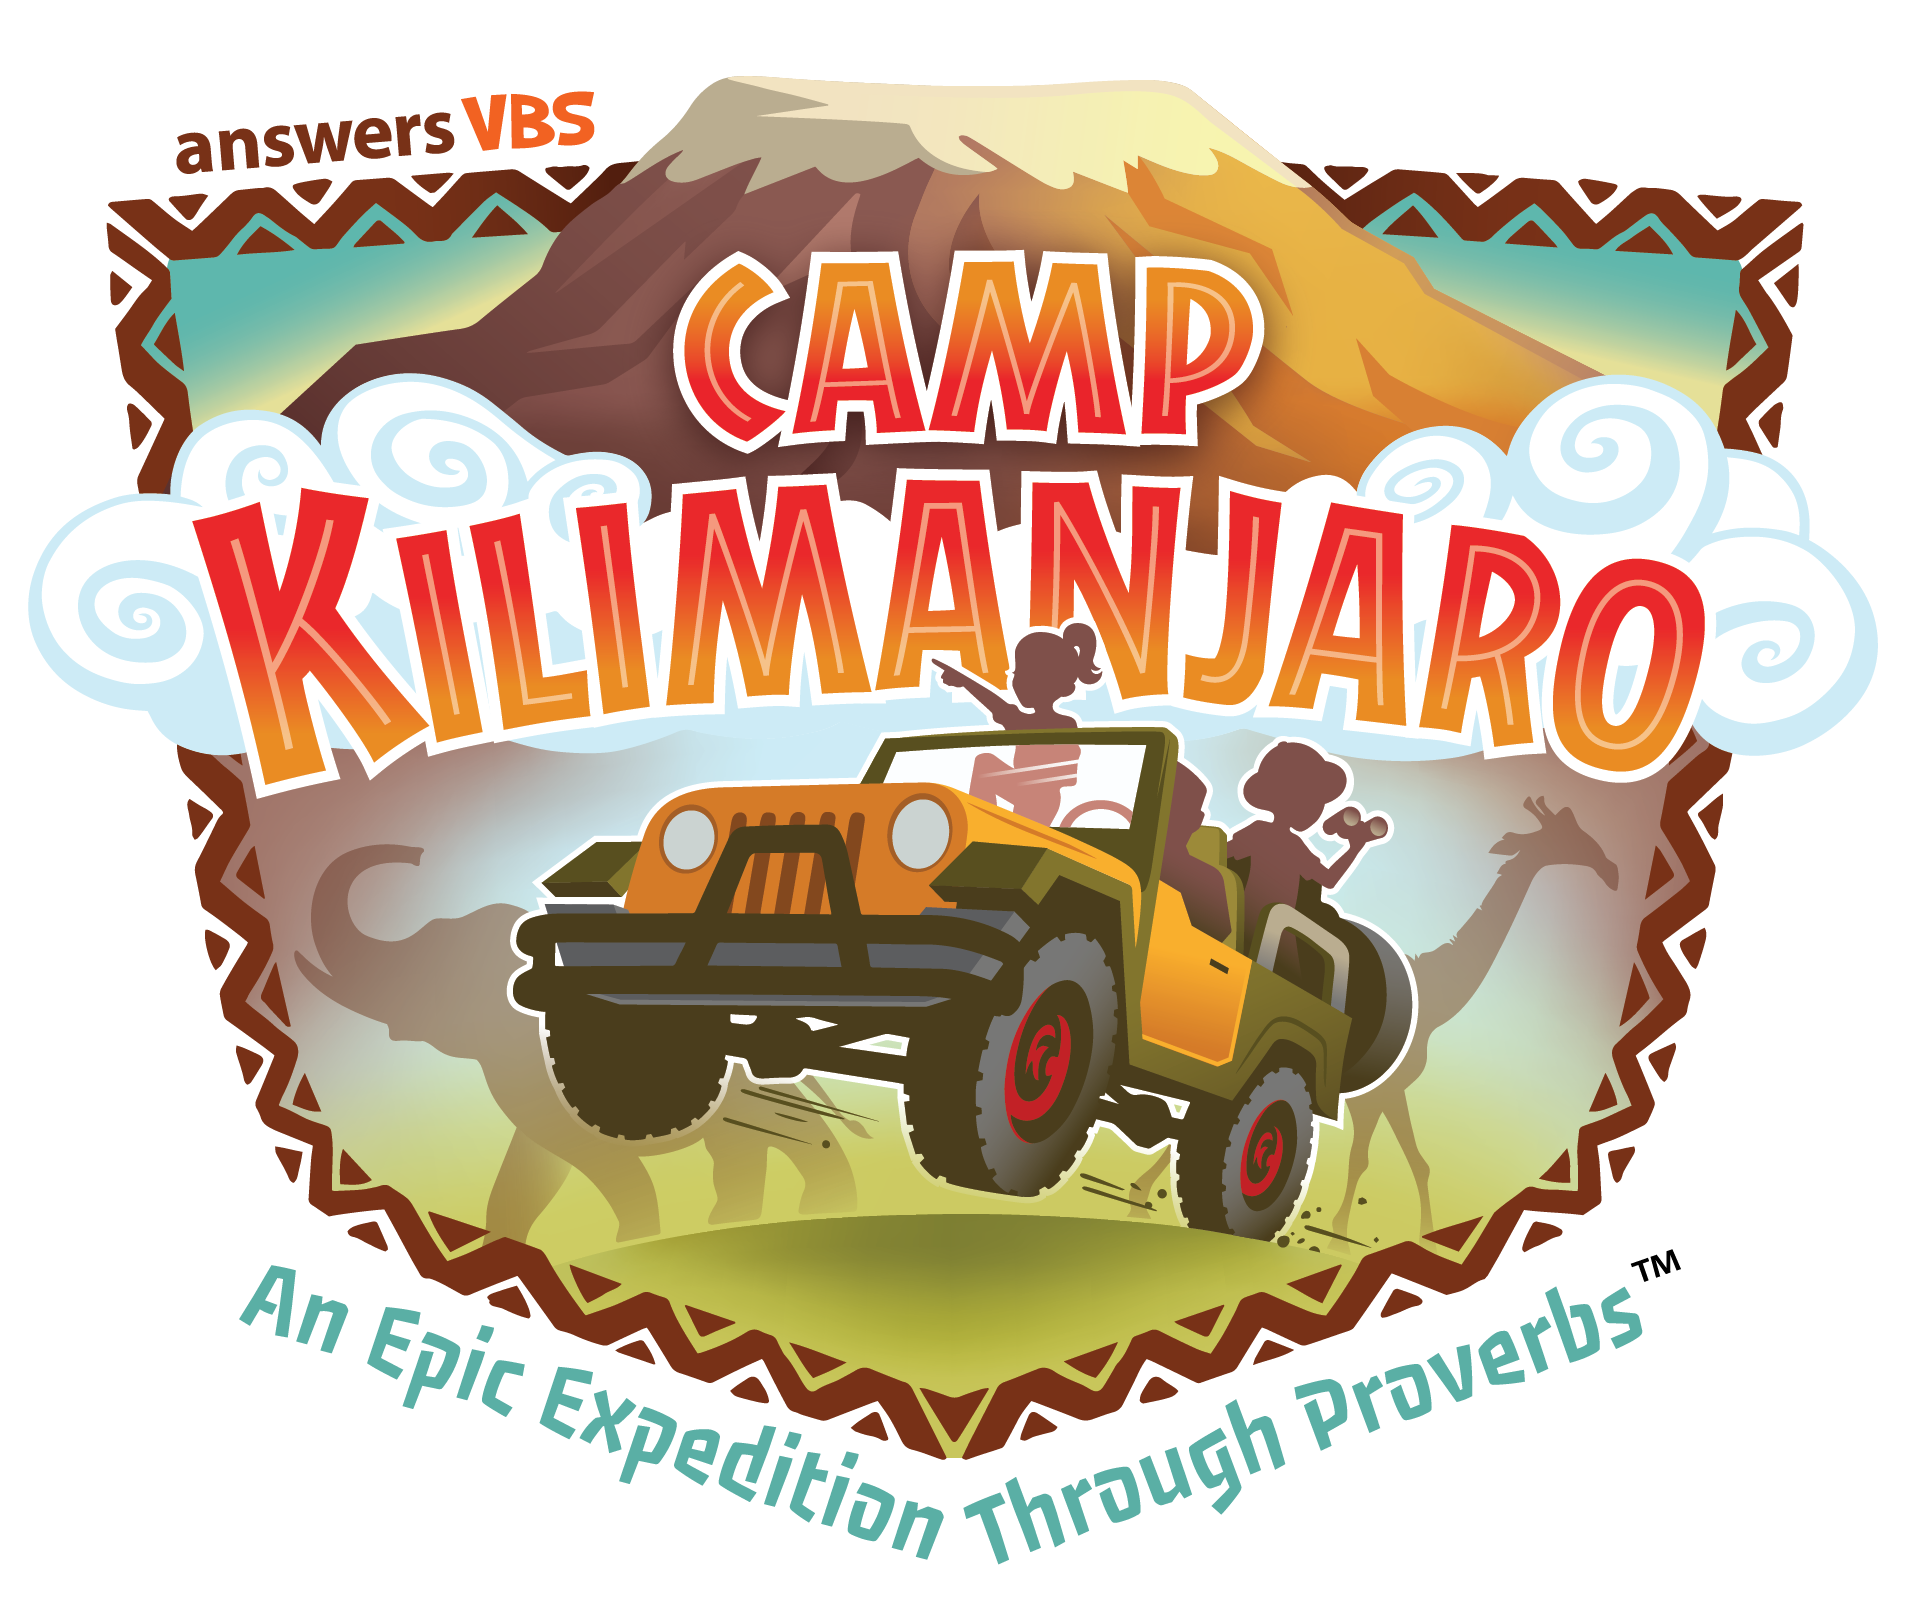 Camp Kilimanjaro Vbs 2015 By Answers Vbs